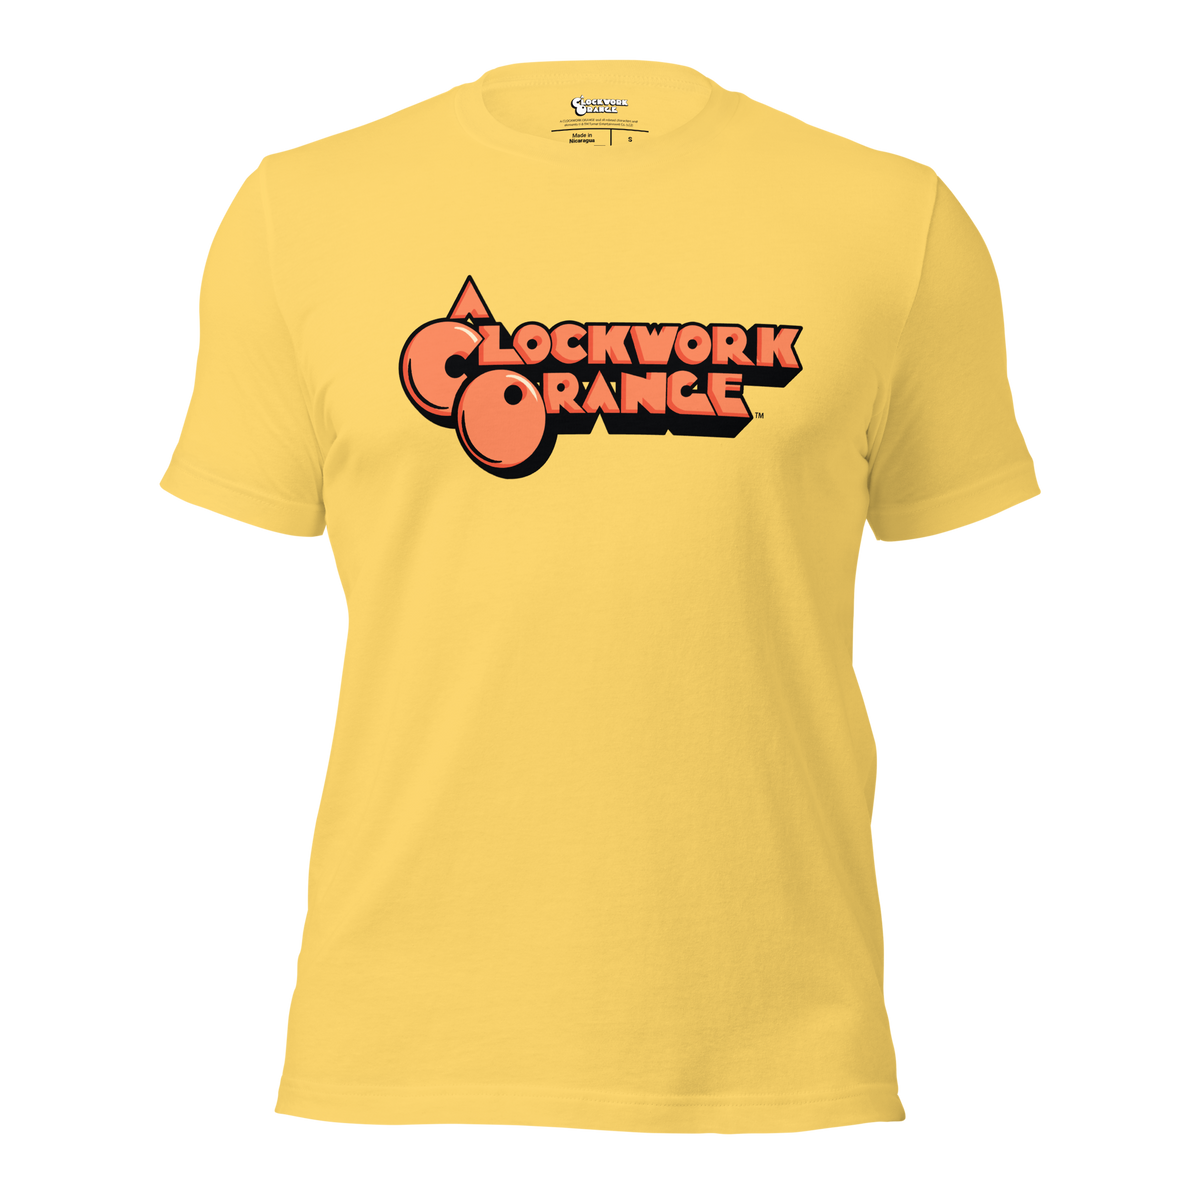 A Clockwork Orange - Film Title - Yellow T-Shirt